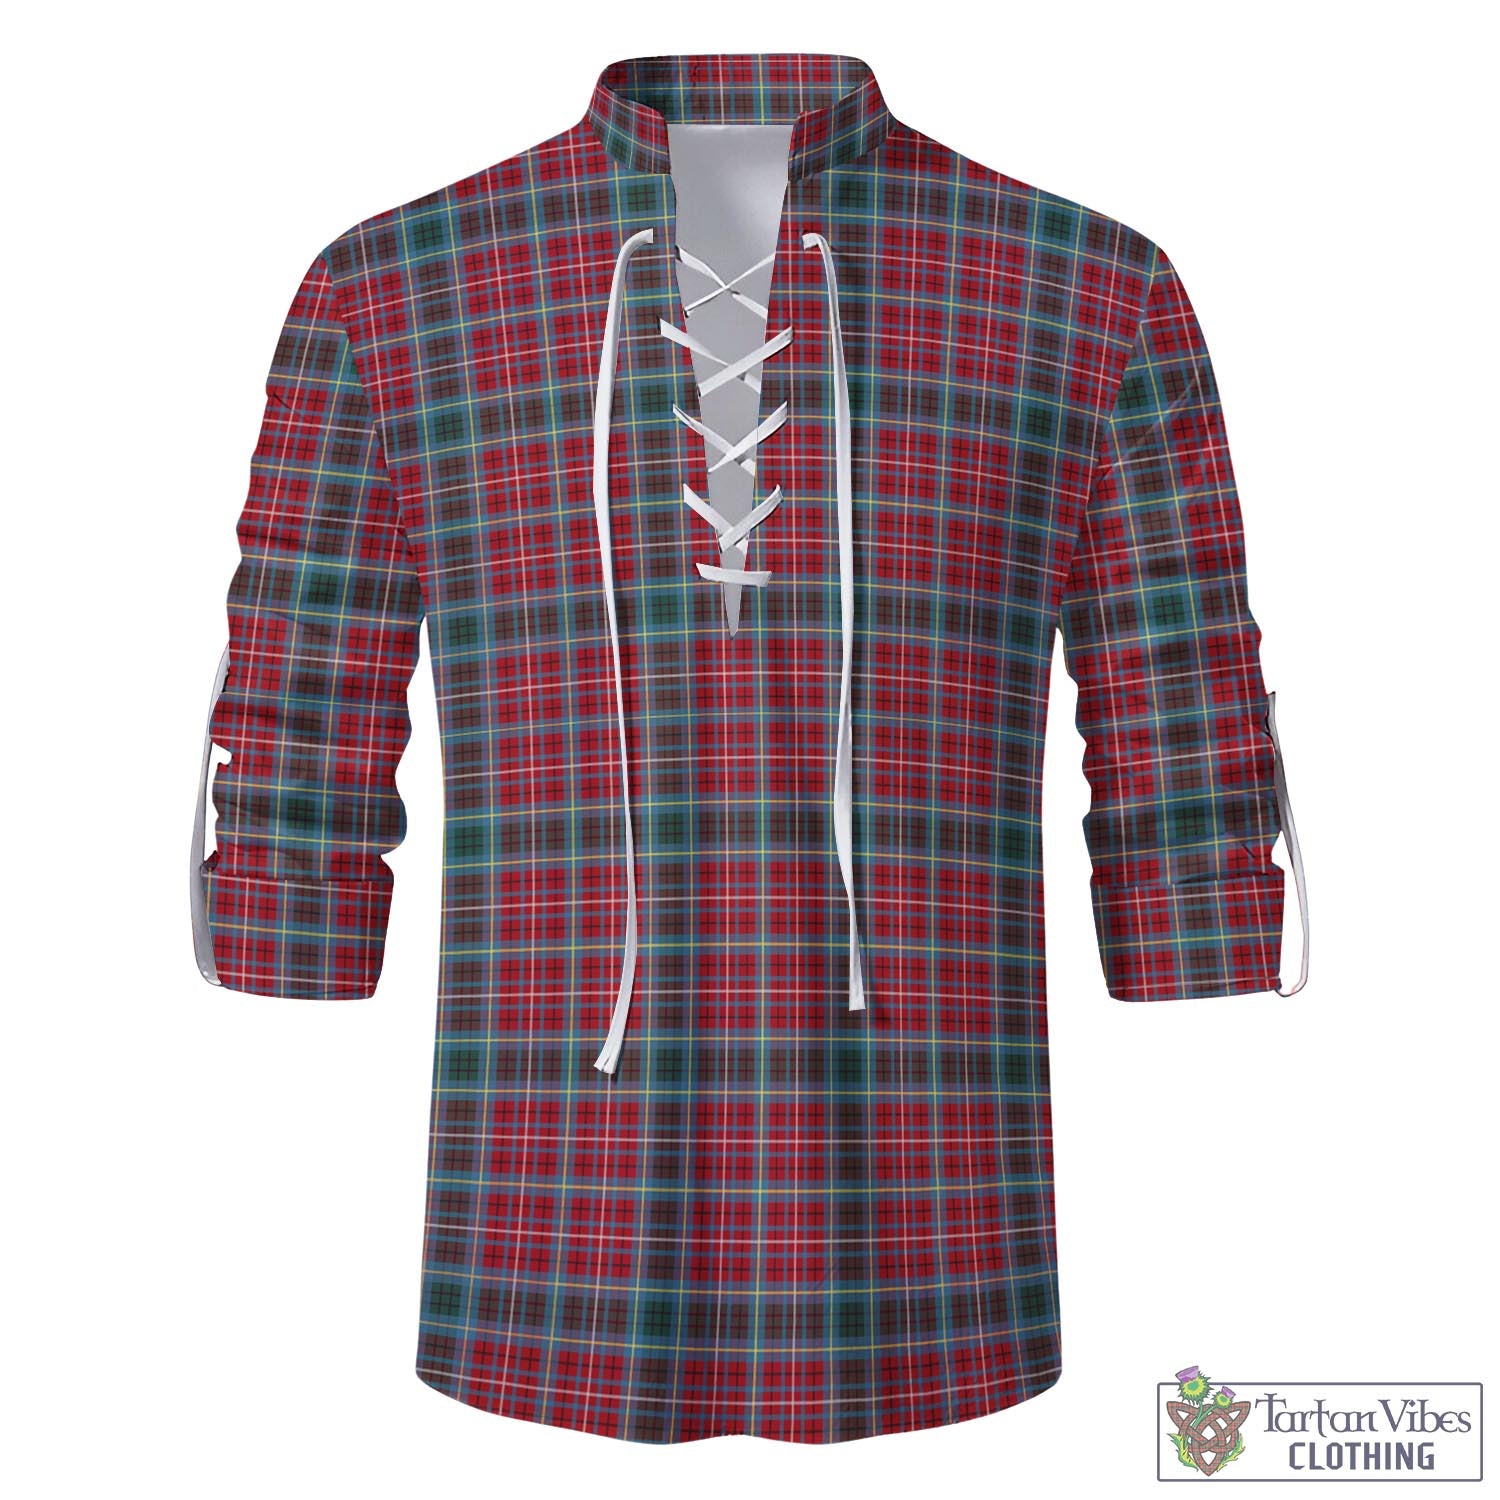 Tartan Vibes Clothing British Columbia Province Canada Tartan Men's Scottish Traditional Jacobite Ghillie Kilt Shirt